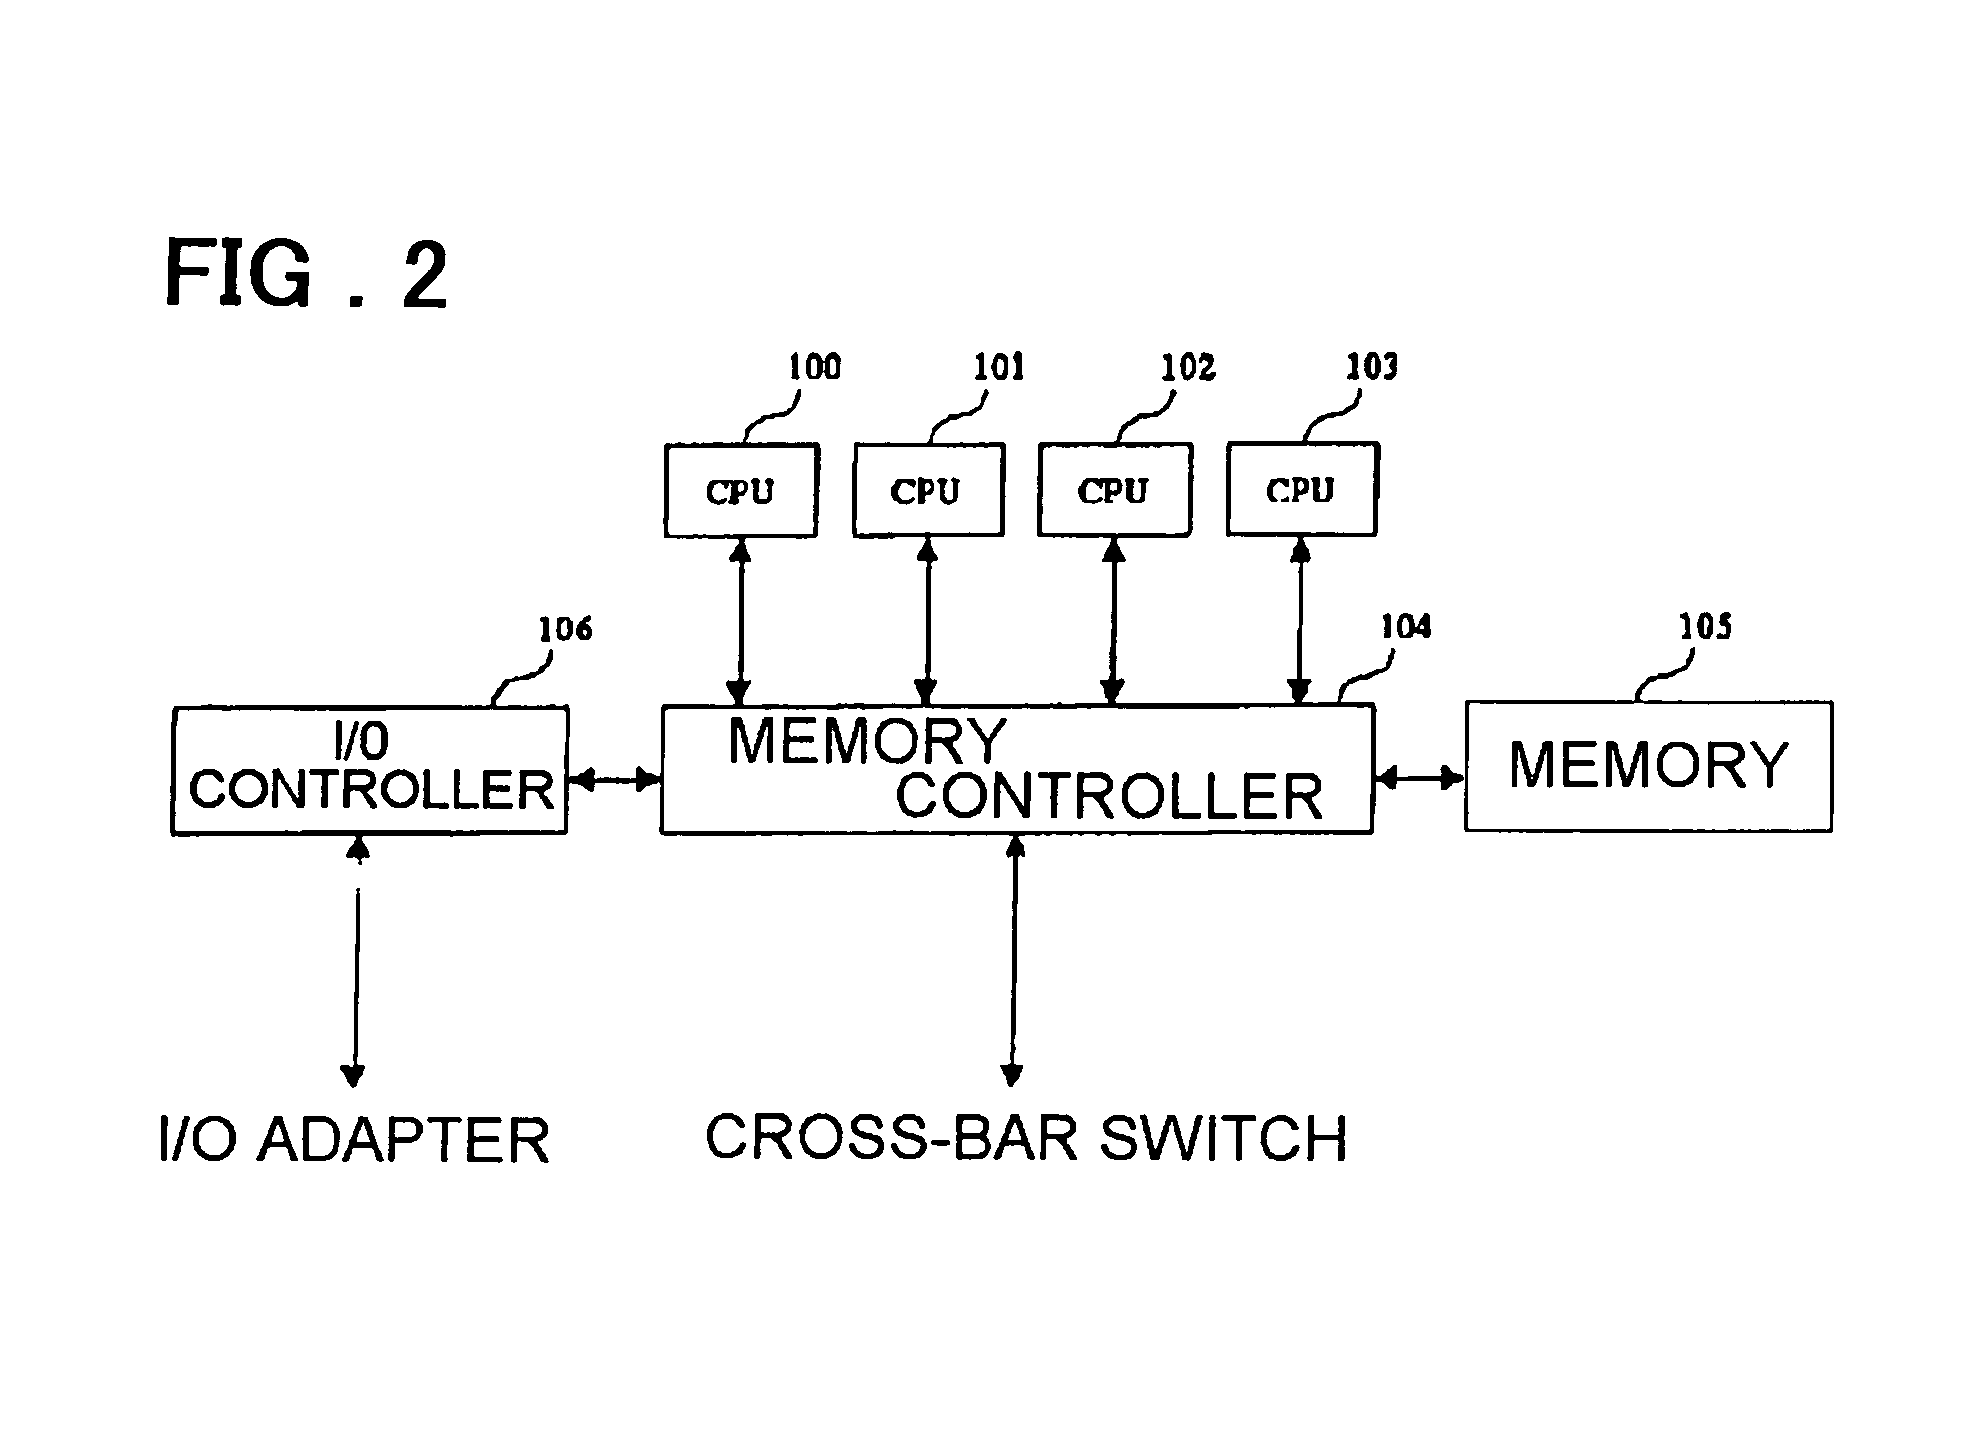 Cross-bar switch system with redundancy